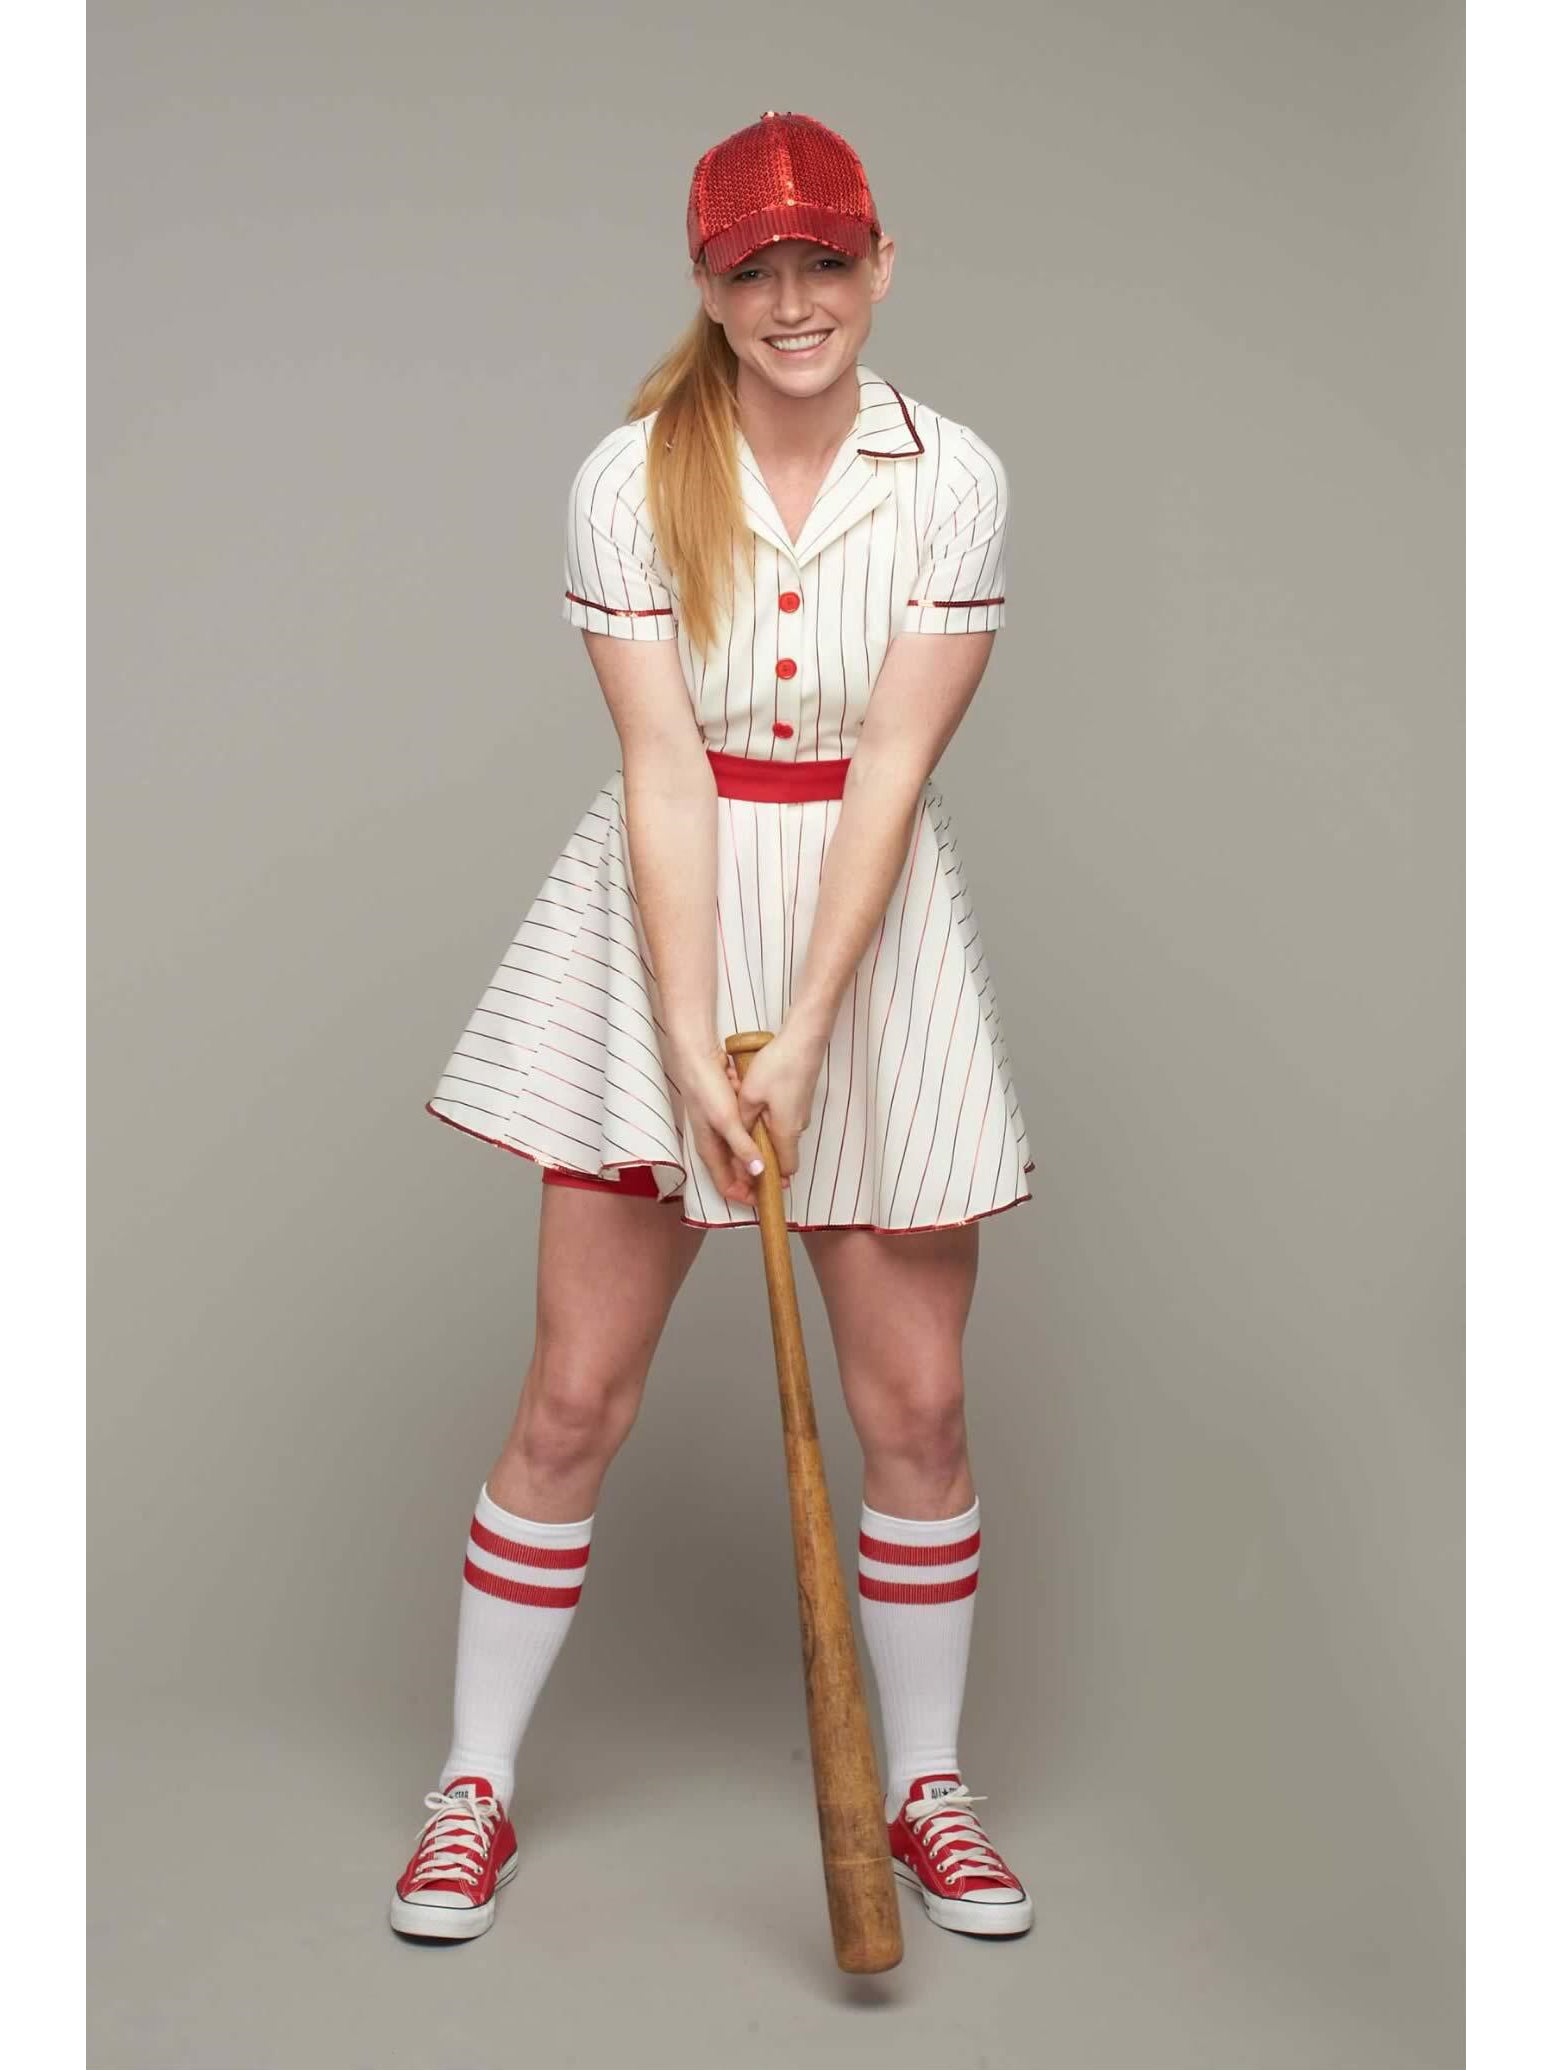 baseball costume women